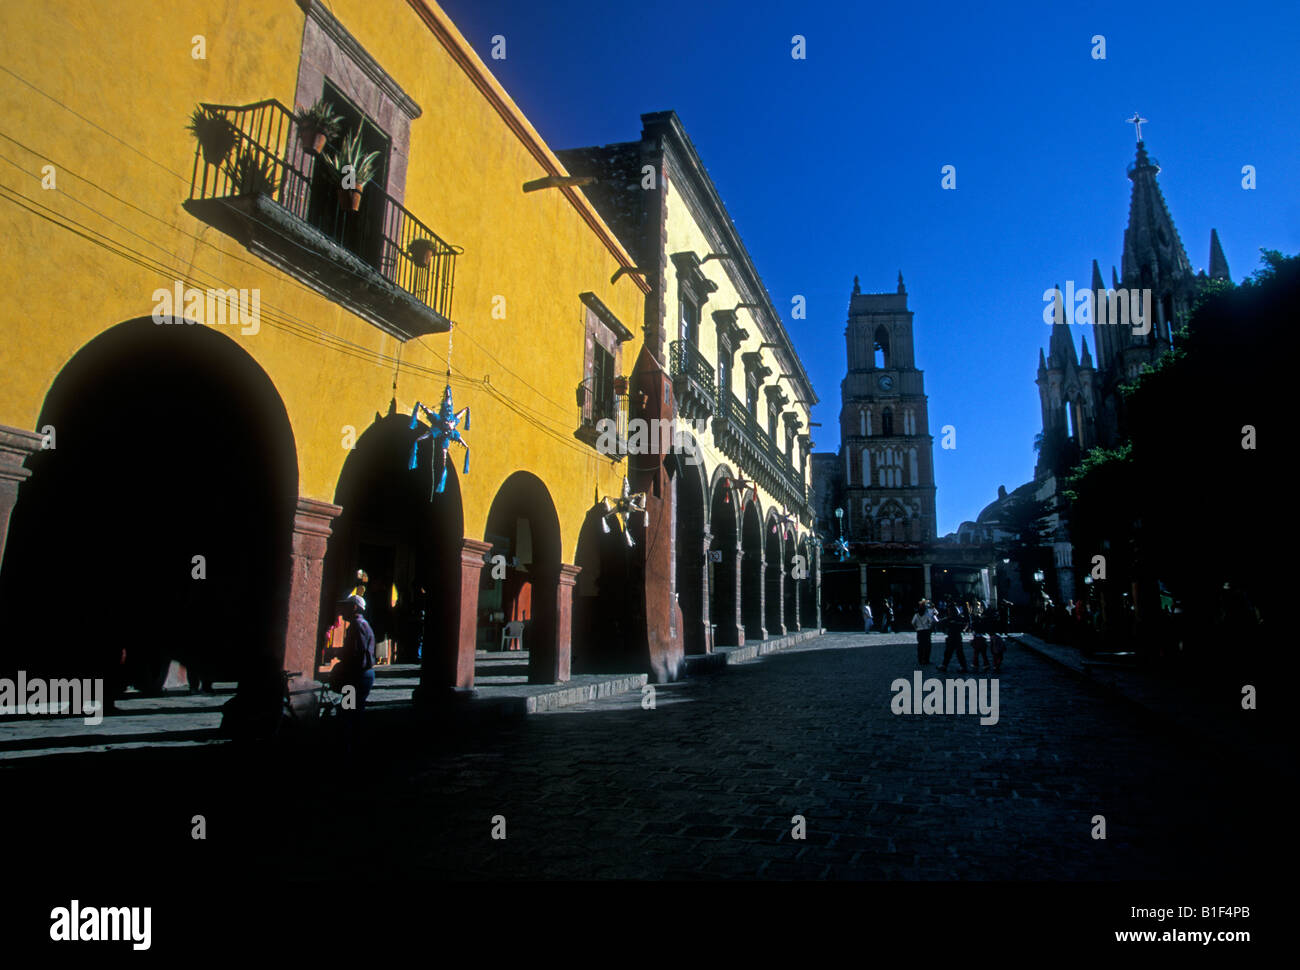 street scene, El Jardin, zocalo, plaza, town of San Miguel de Allende, San Miguel de Allende, Guanajuato State, Mexico Stock Photo